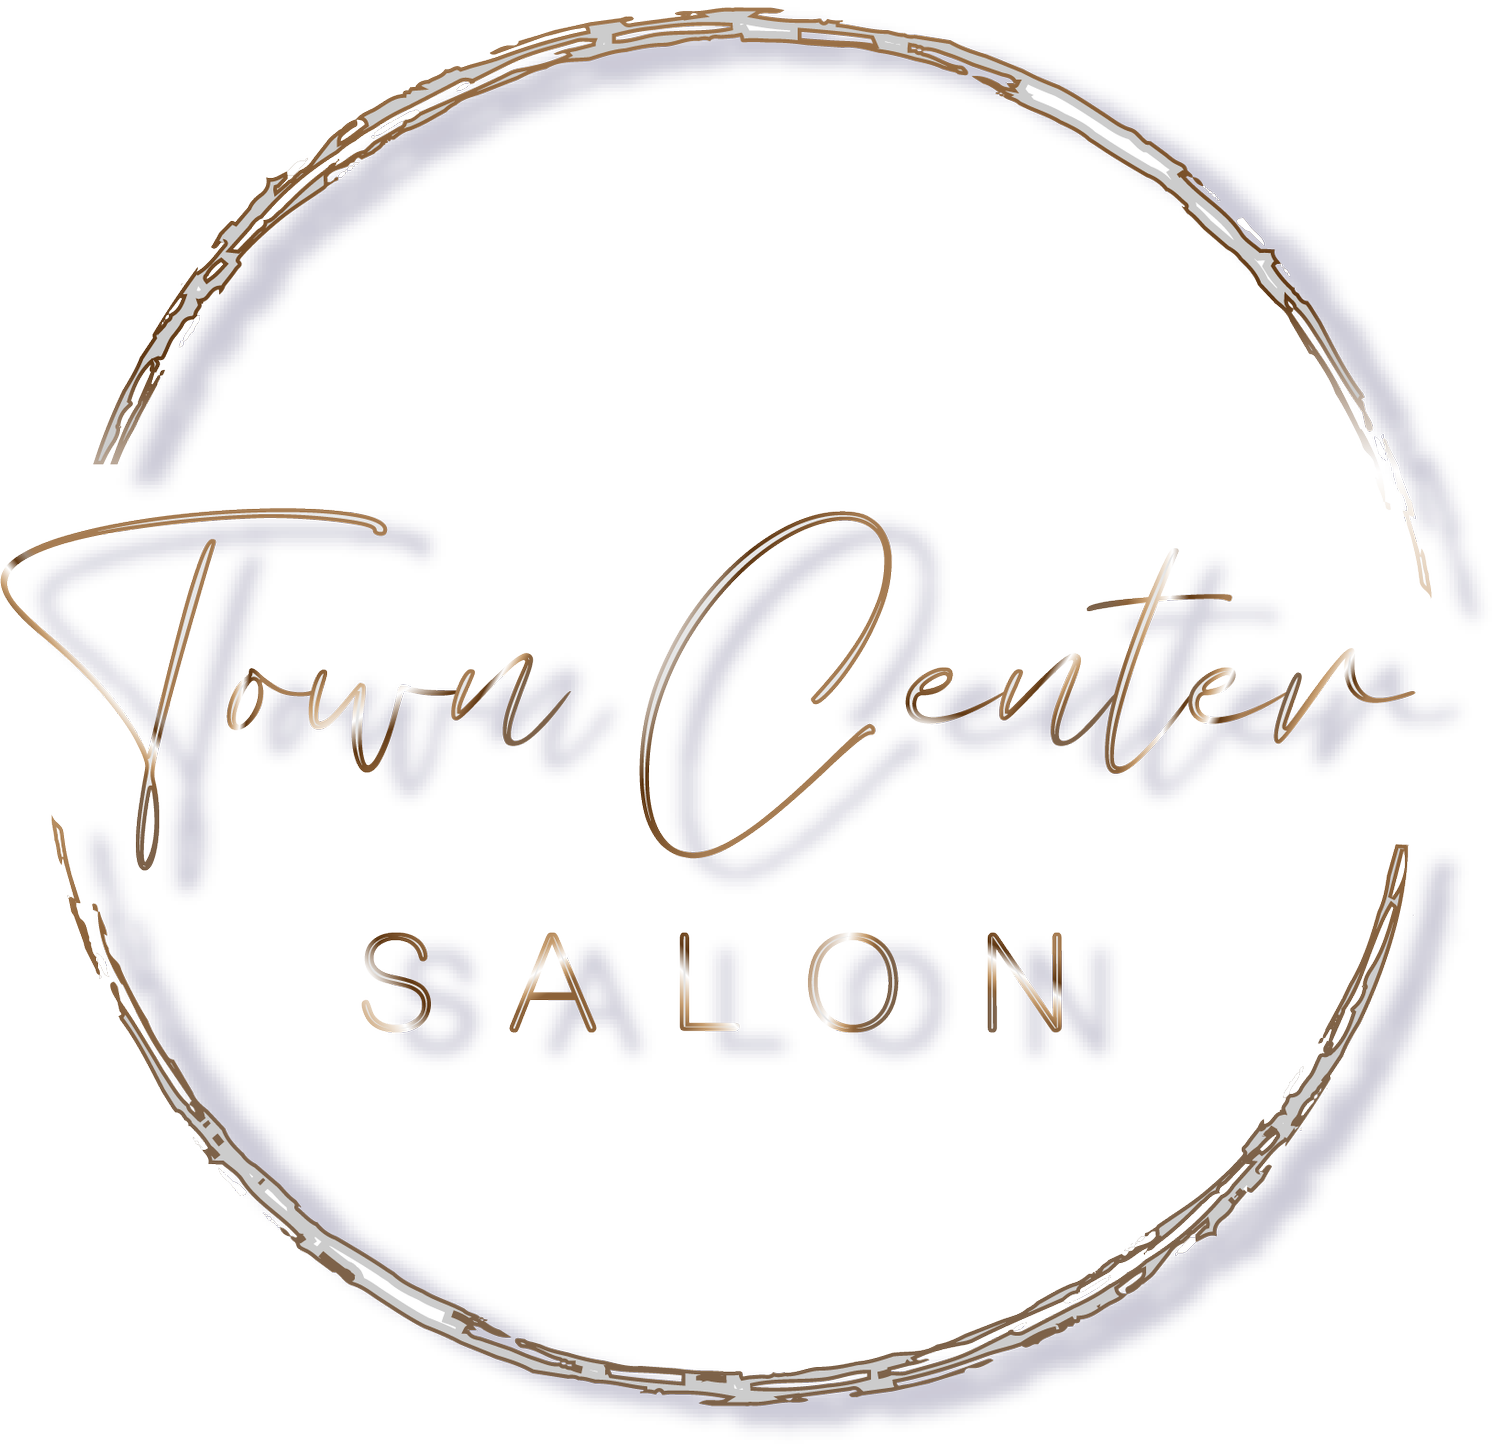 Town Center Salon